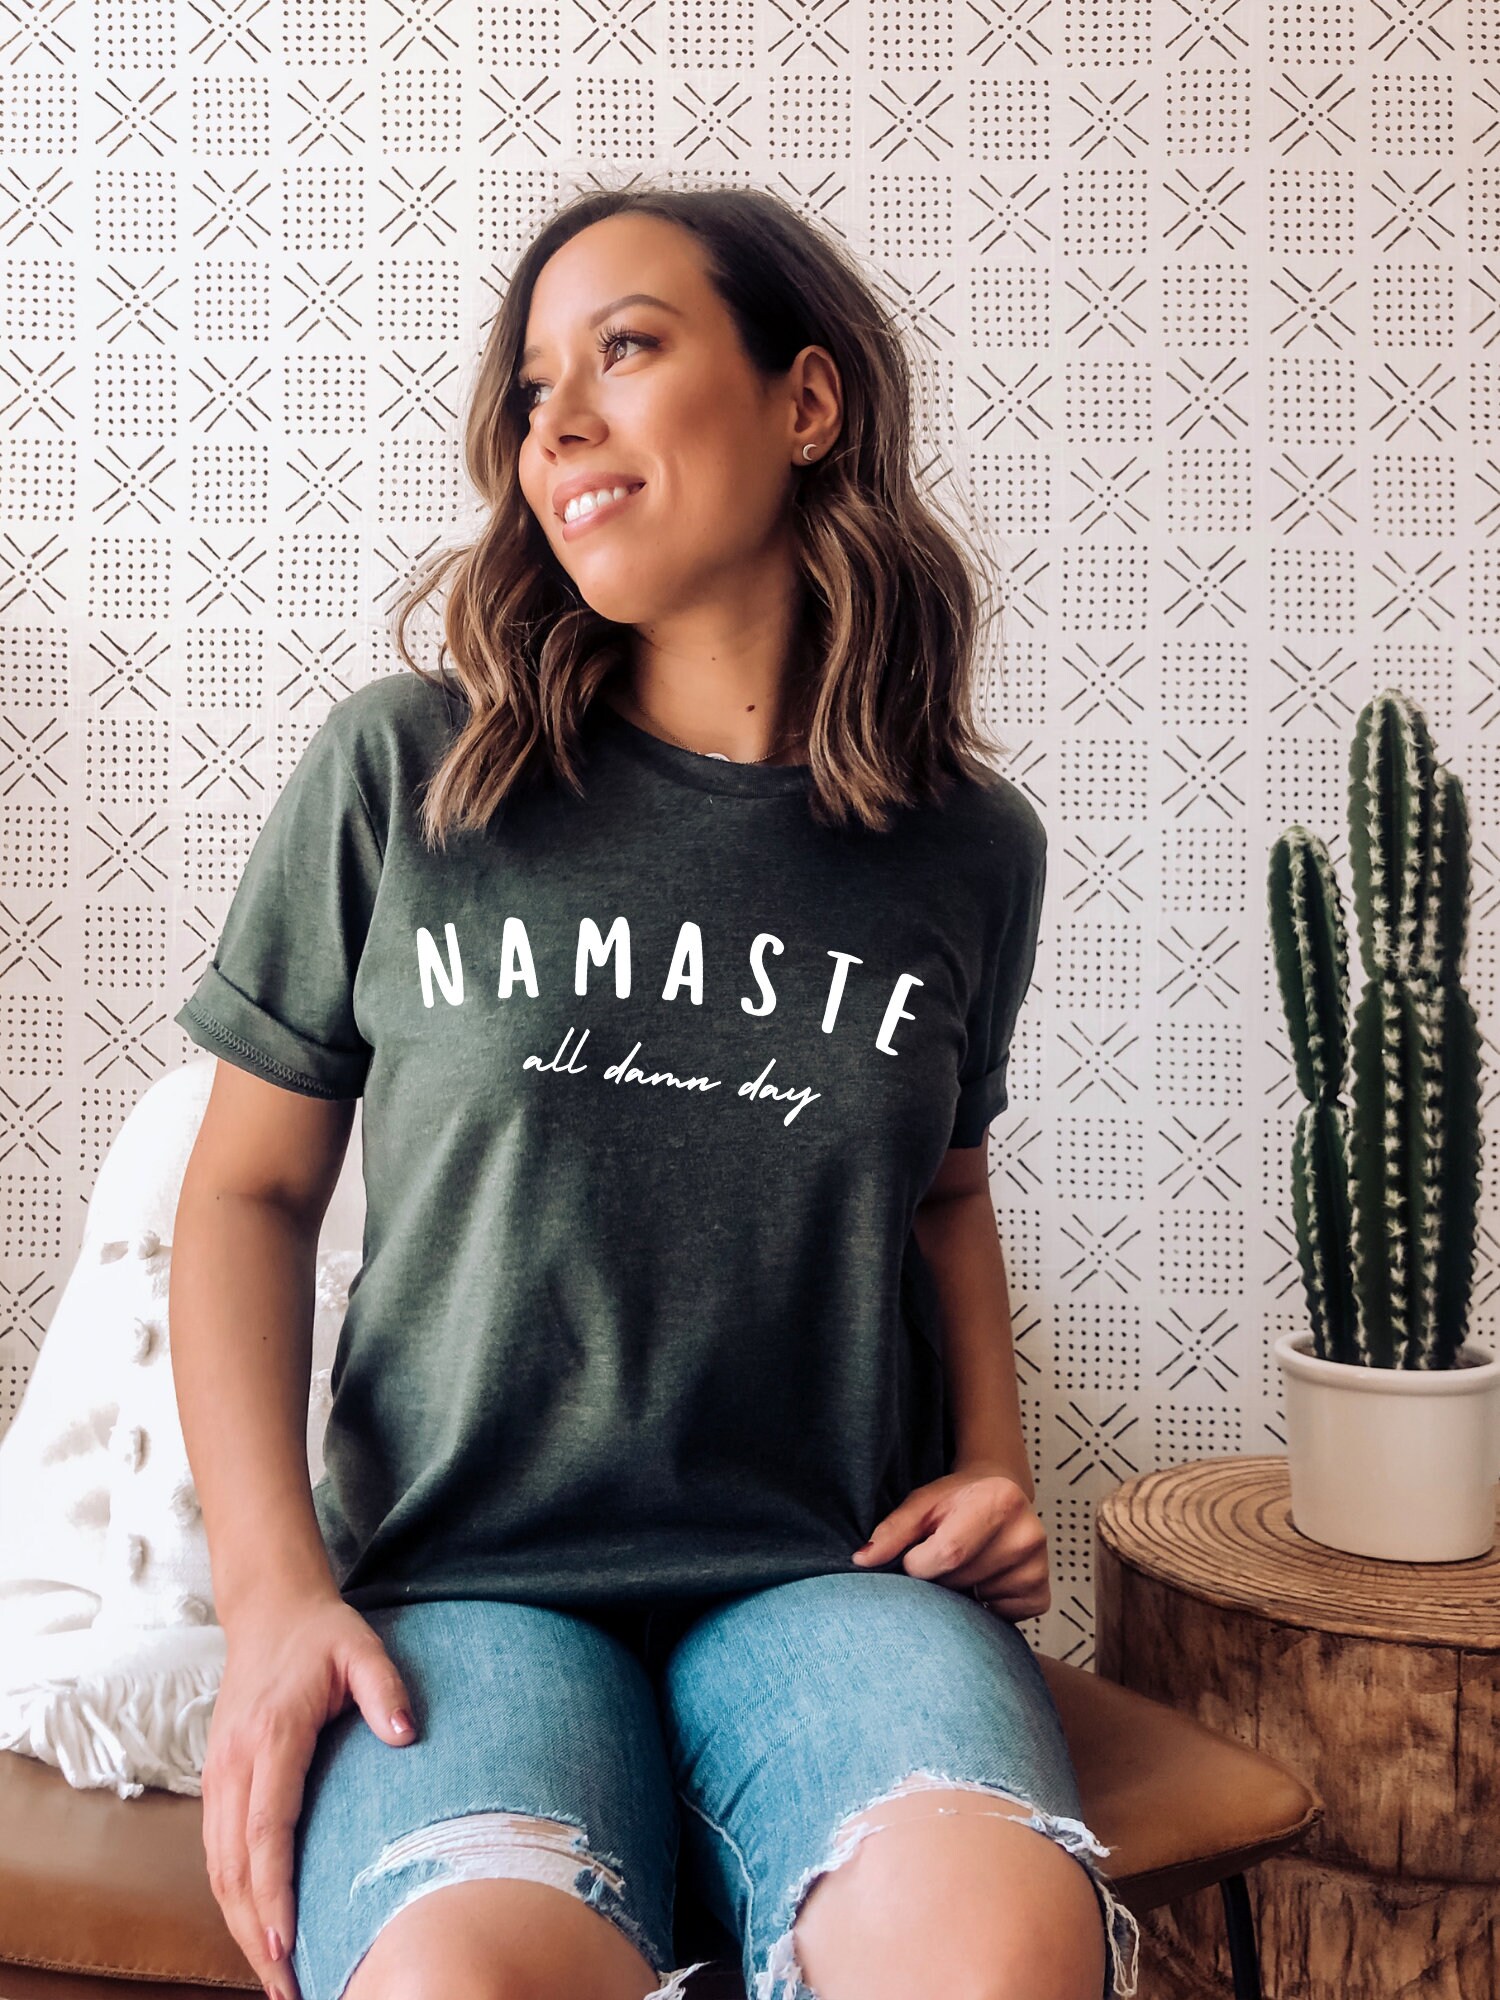 Namaste Tees Several Options – Area 478, 42% OFF